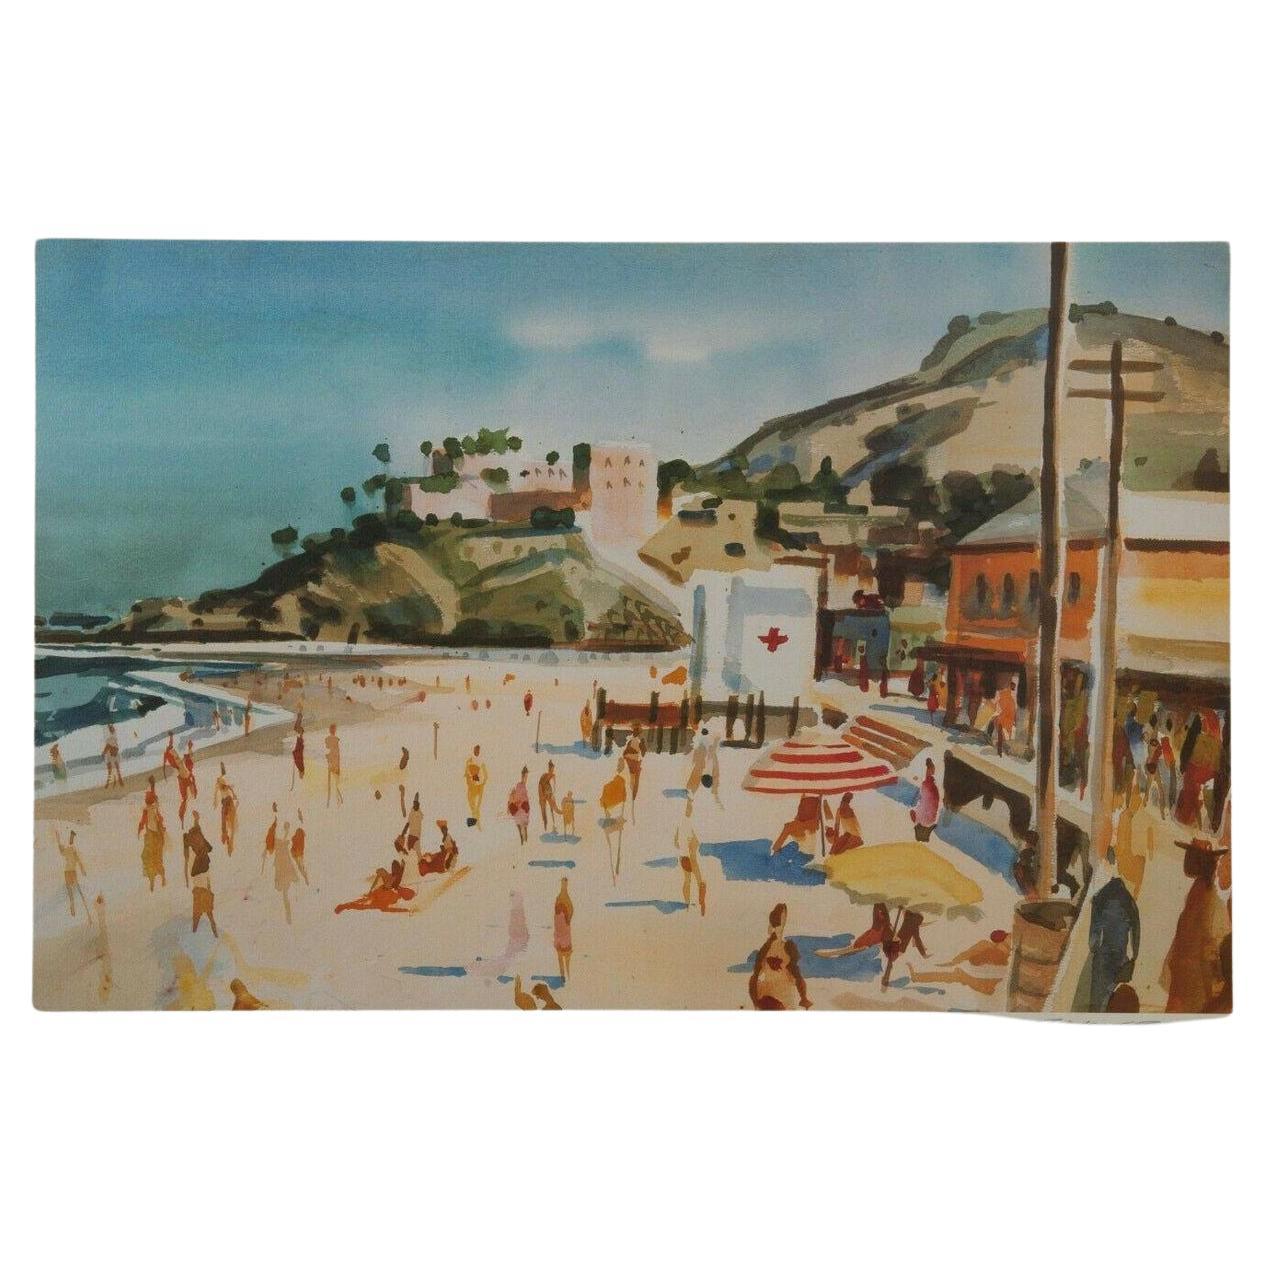 Milford Zornes "Main Beach Laguna" Lithograph Print Limited 62 of 250 Signed